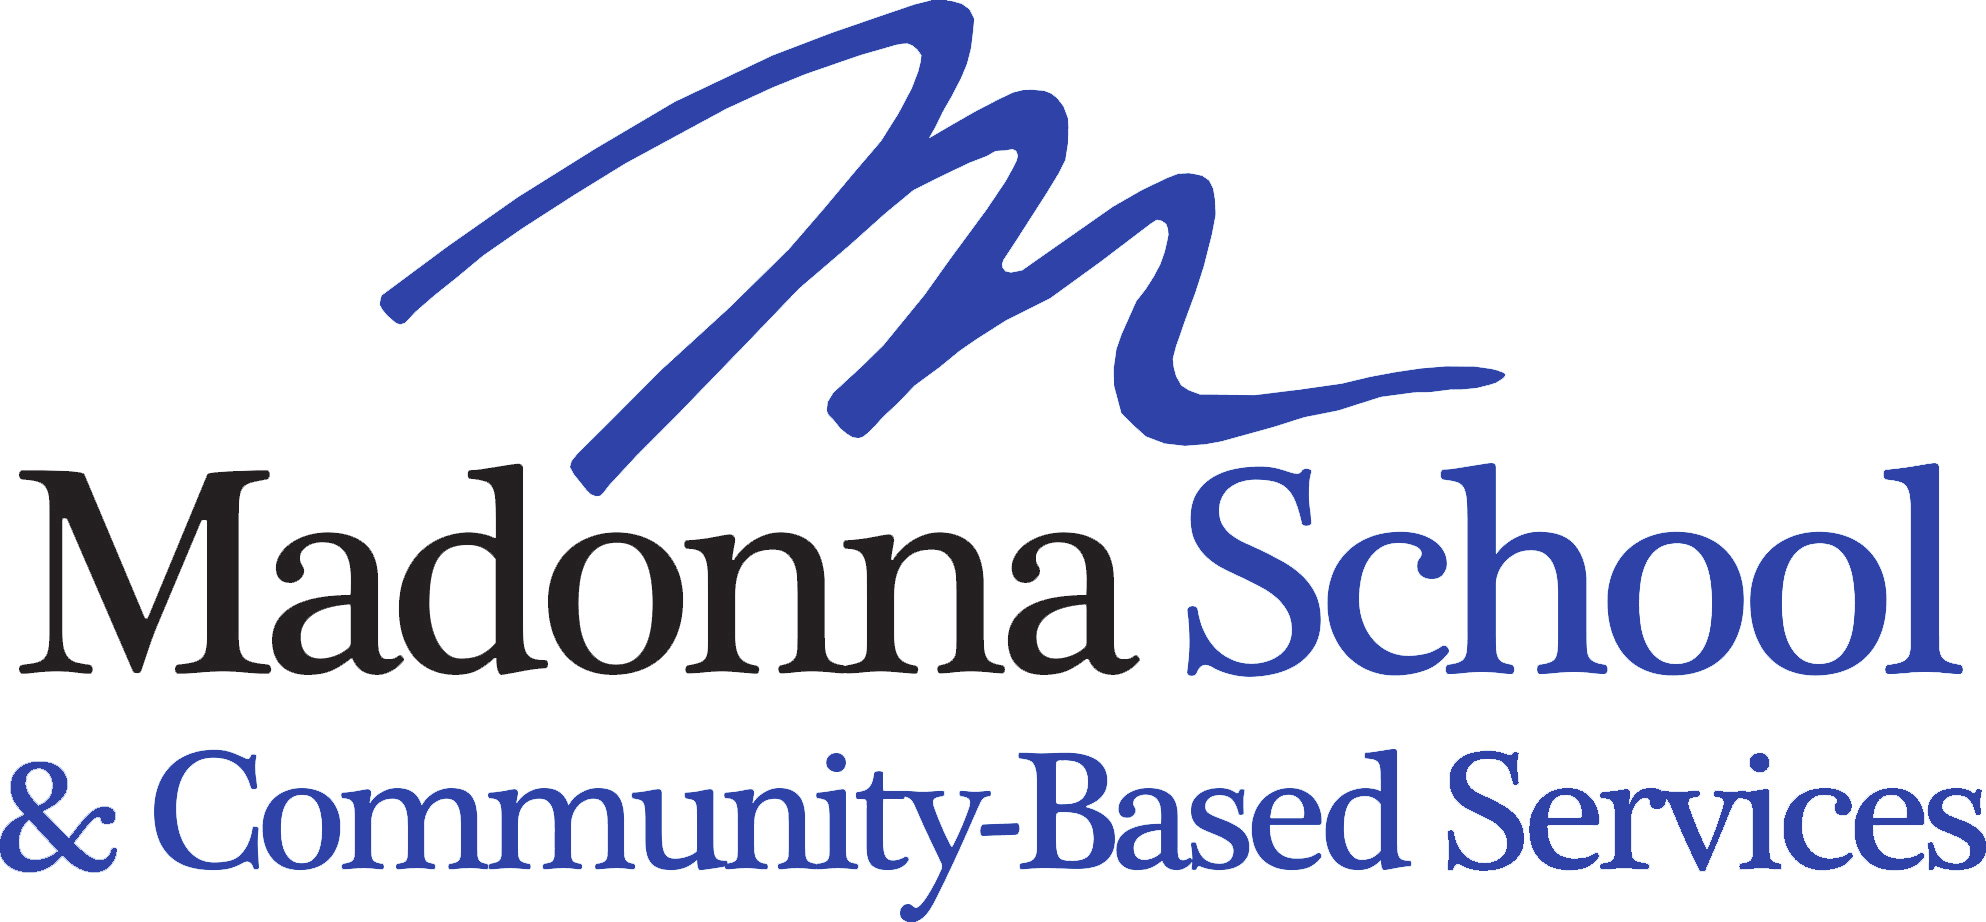 Madonna School Logo